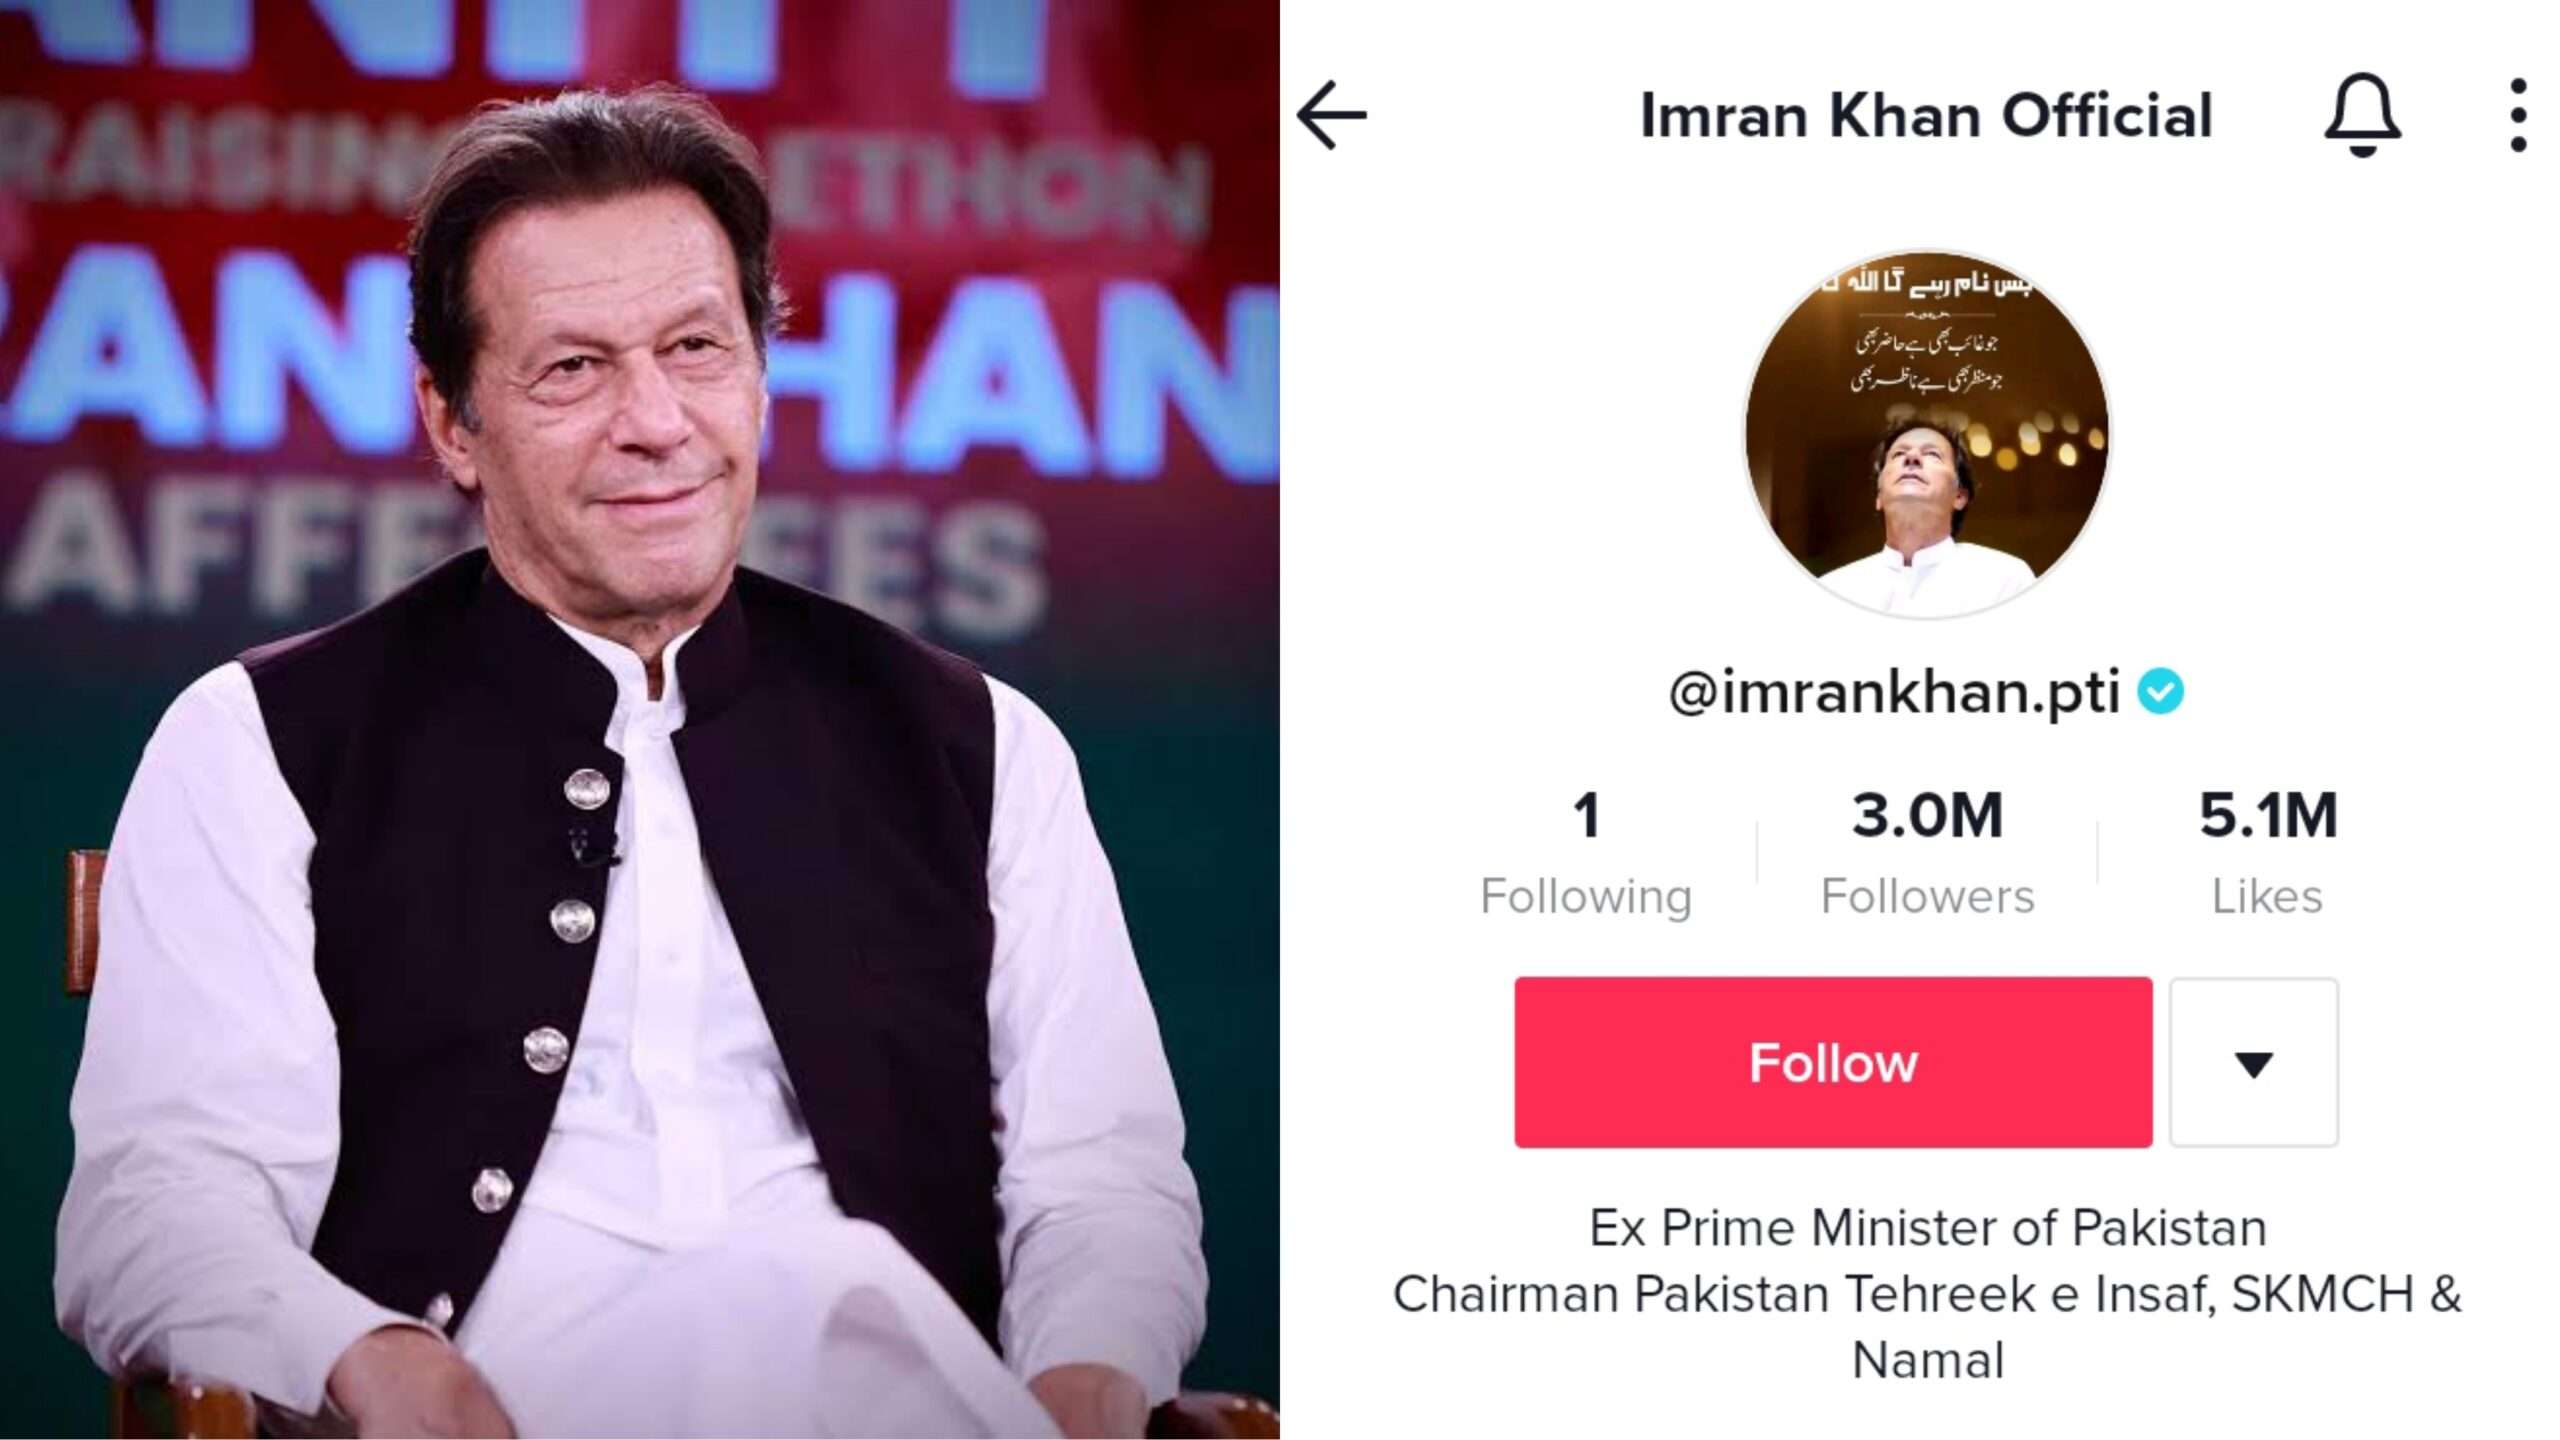 Imran Khan’s TikTok account crosses 3 Million followers